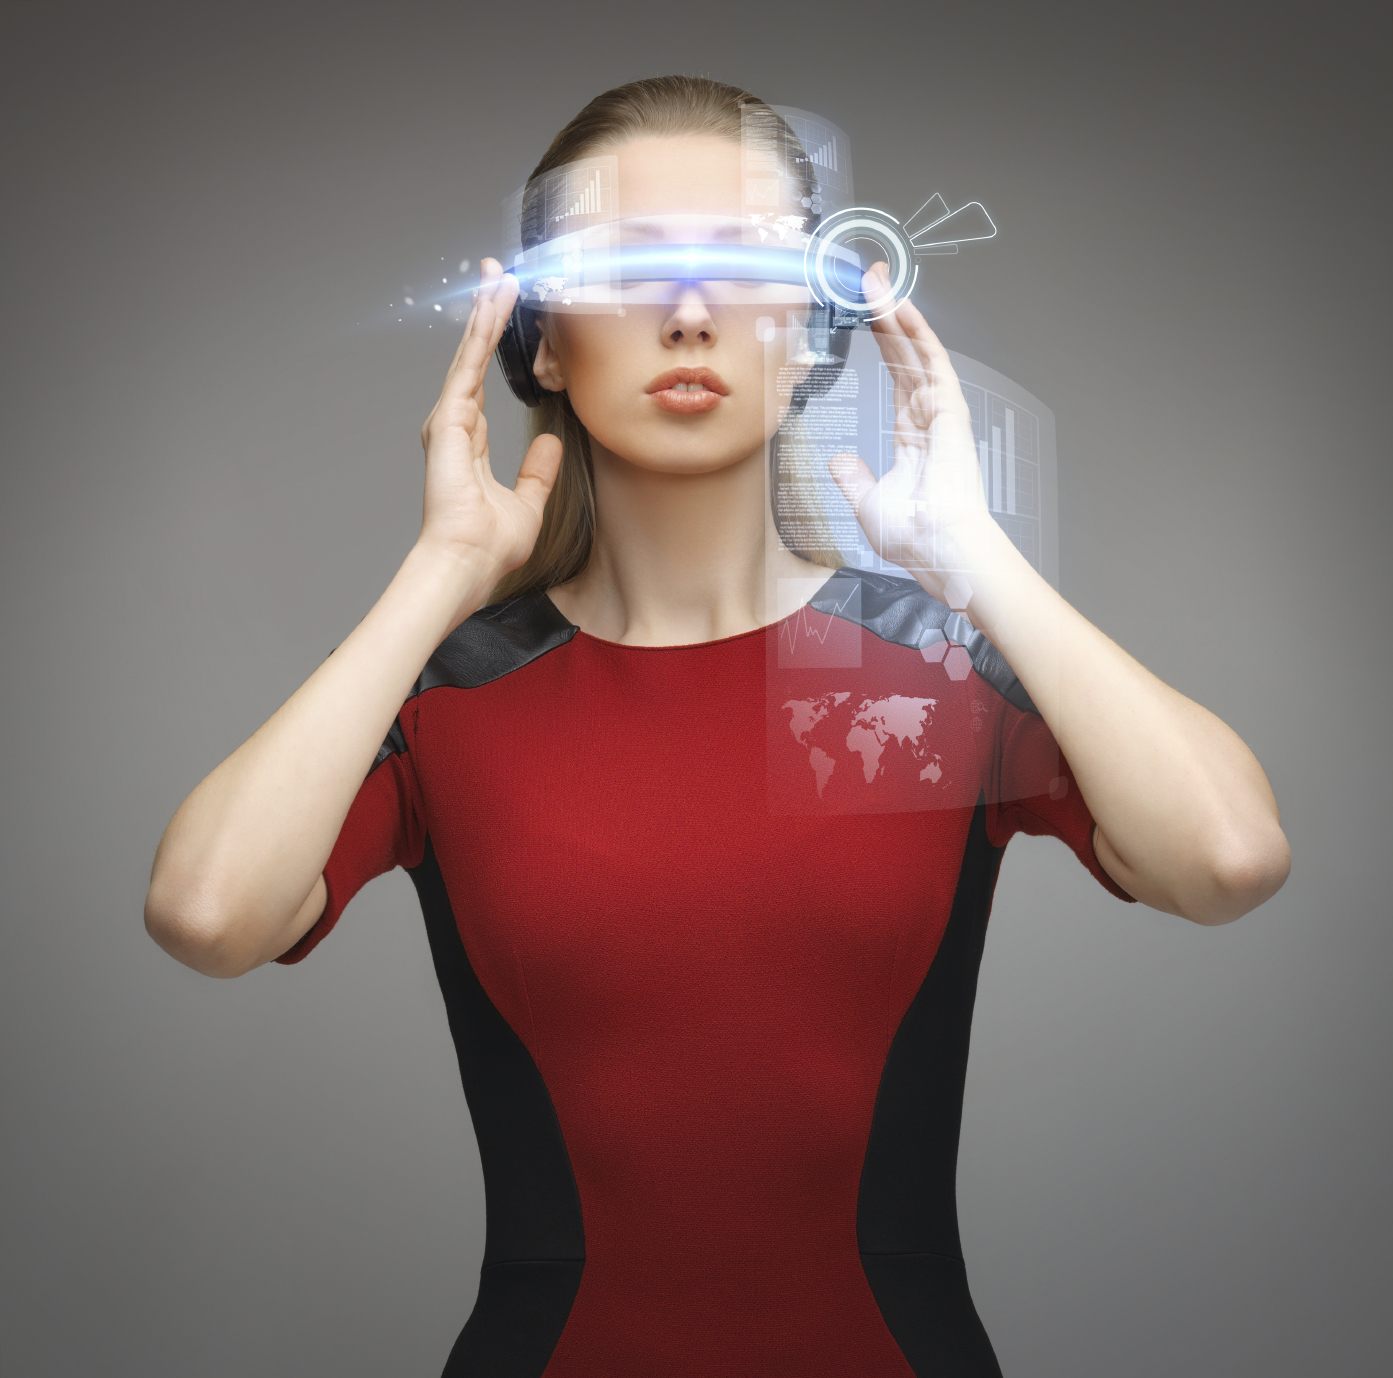 woman with futuristic glasses